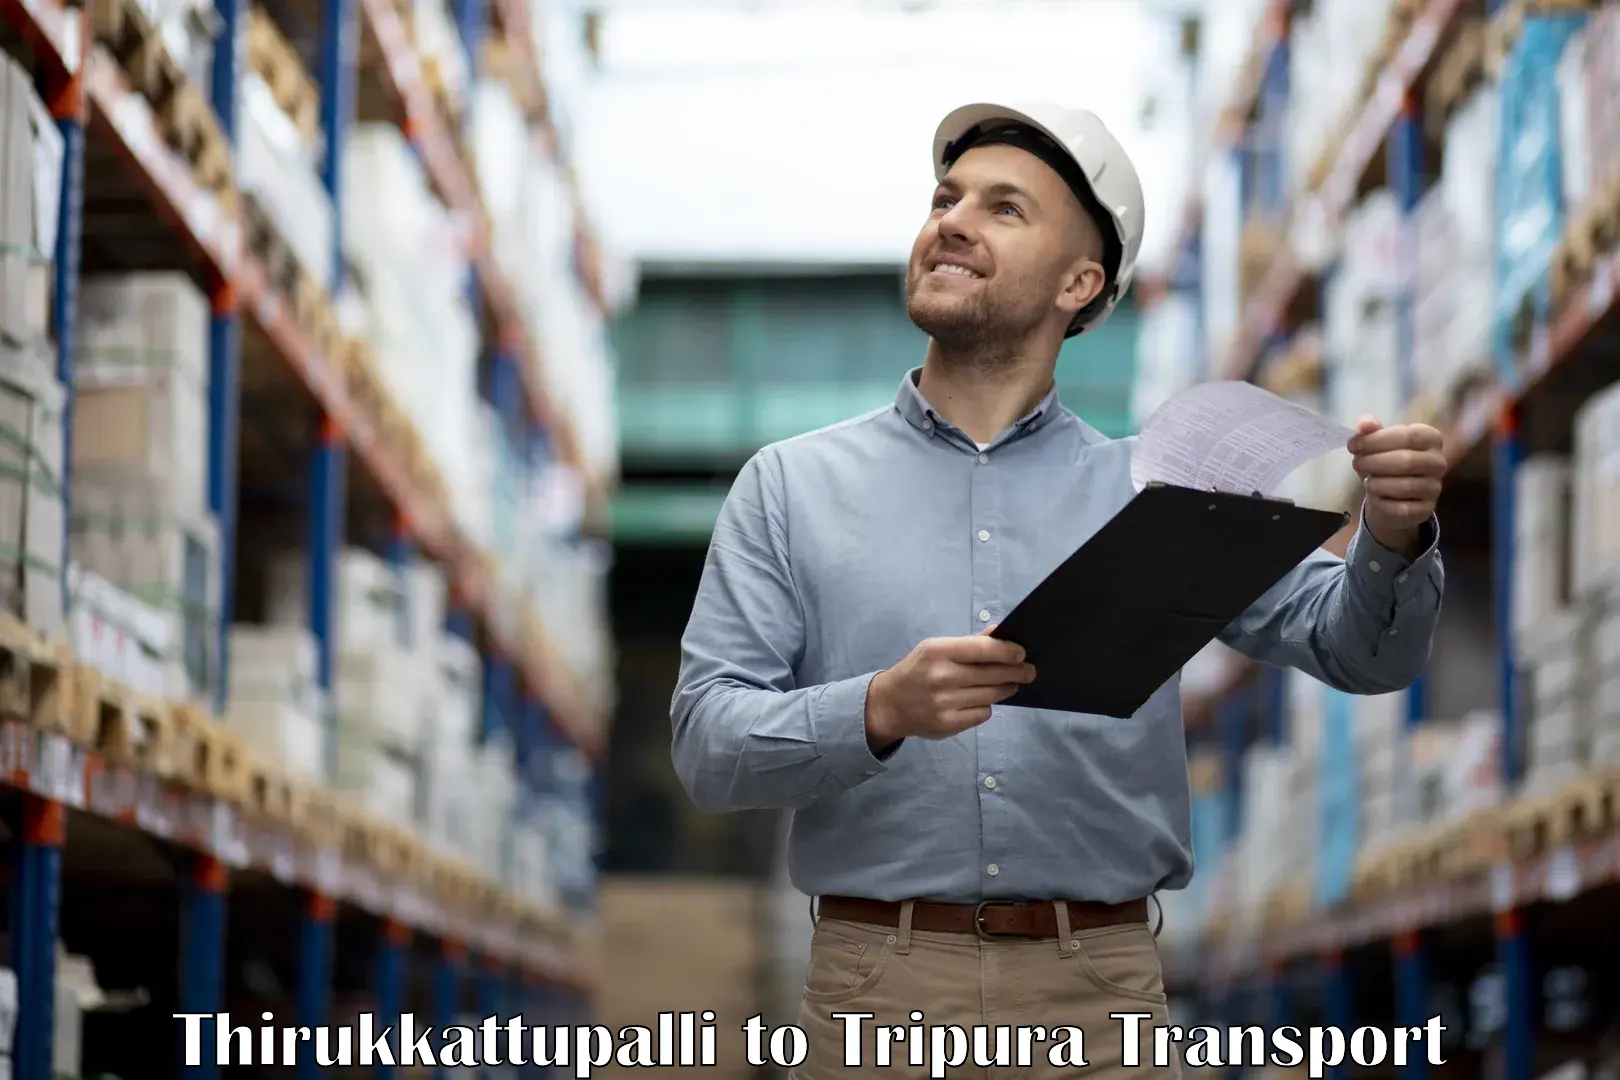 Delivery service Thirukkattupalli to Tripura